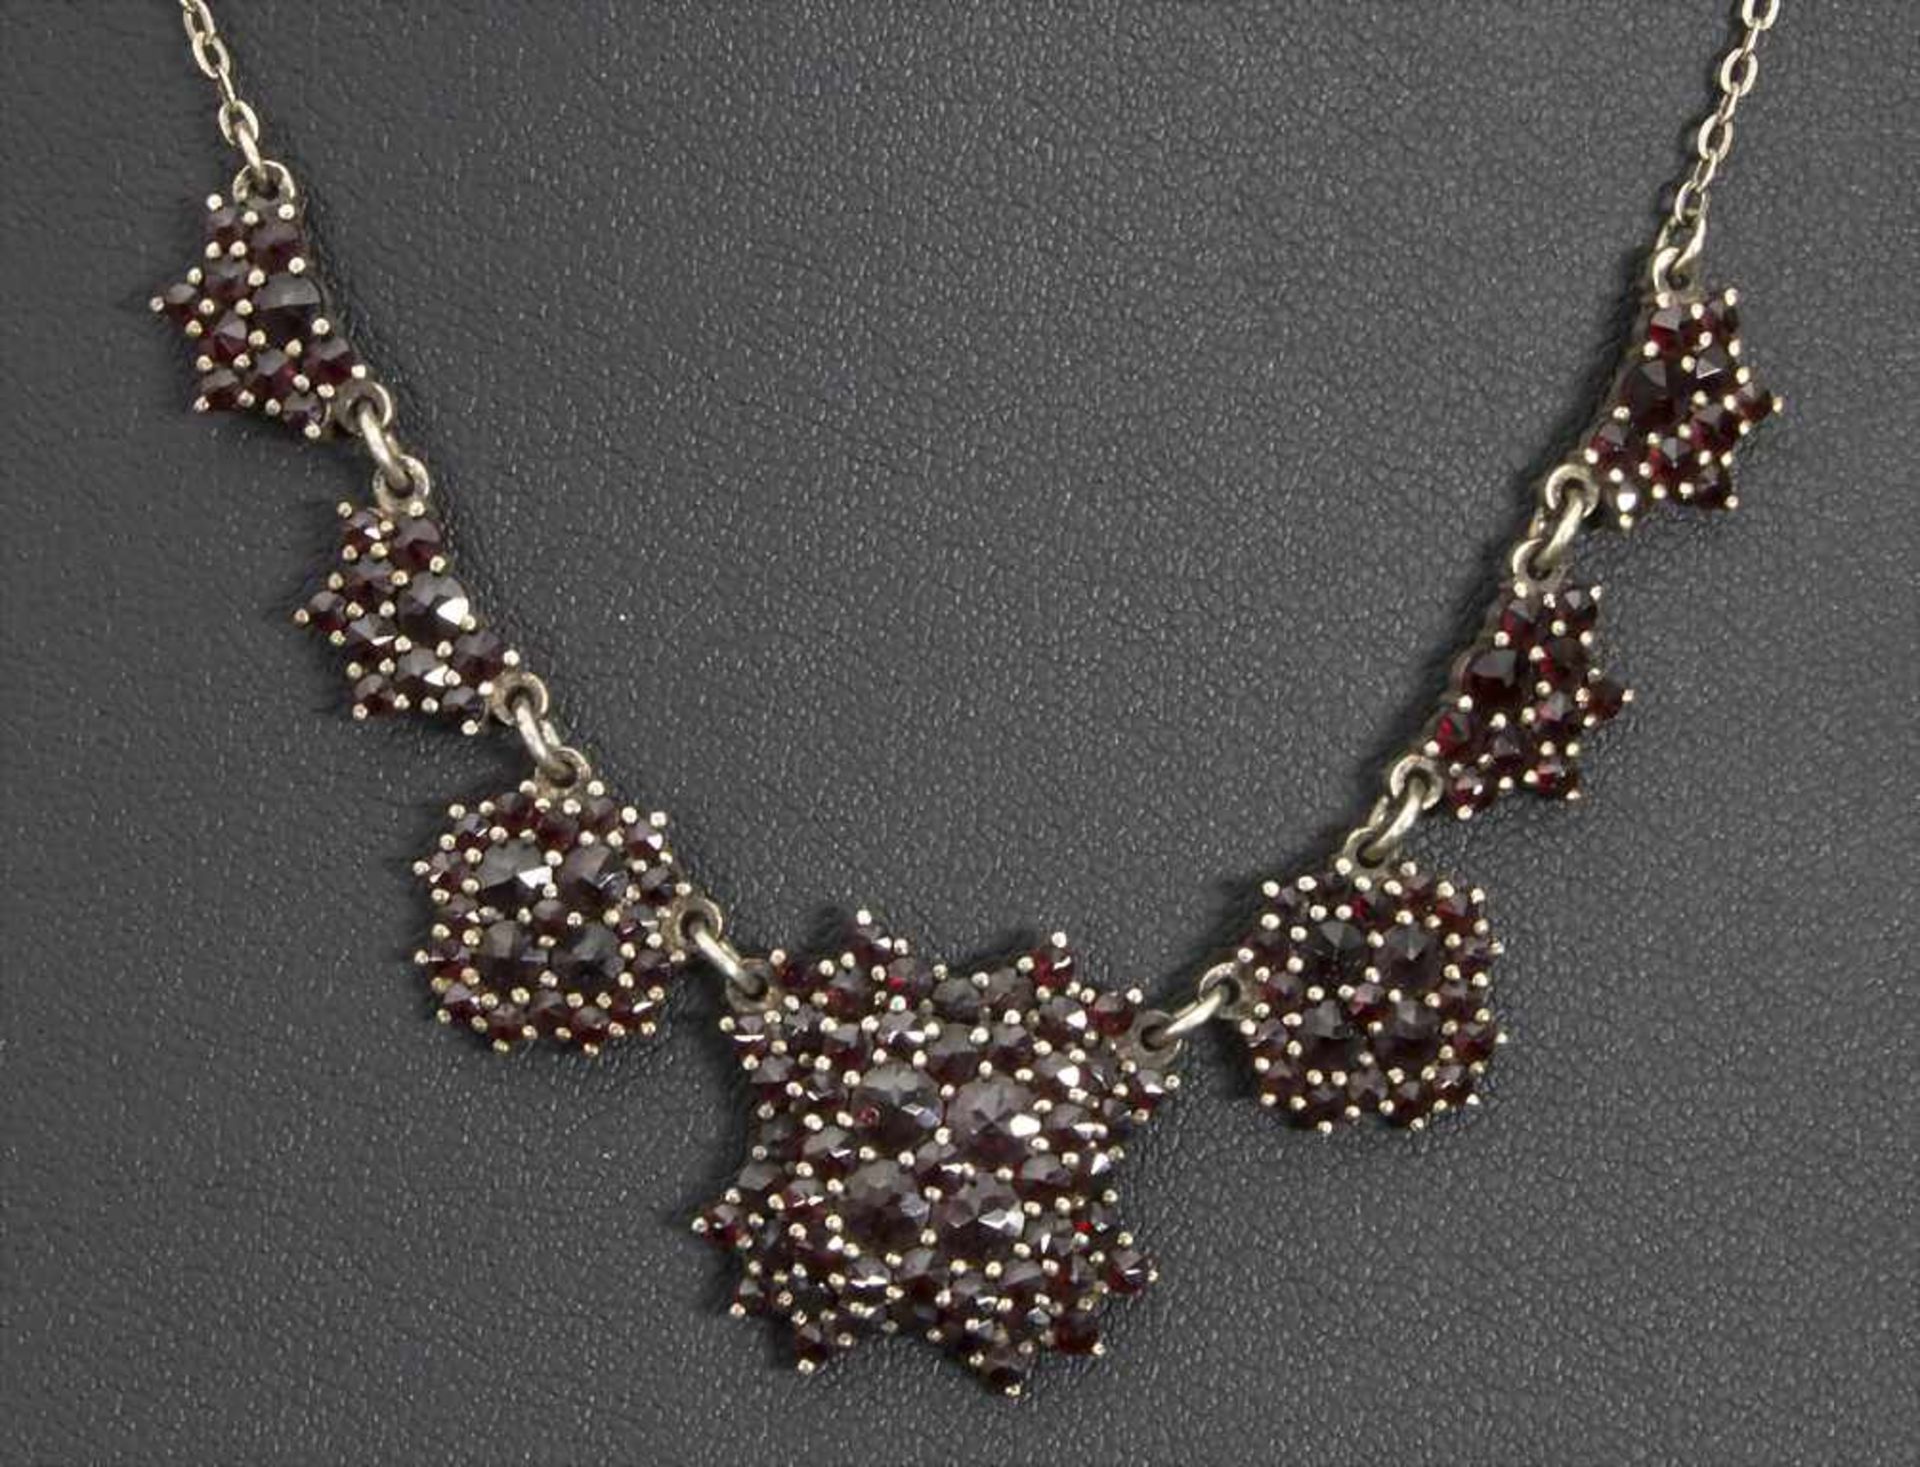 Granat-Collier / A garnet necklace